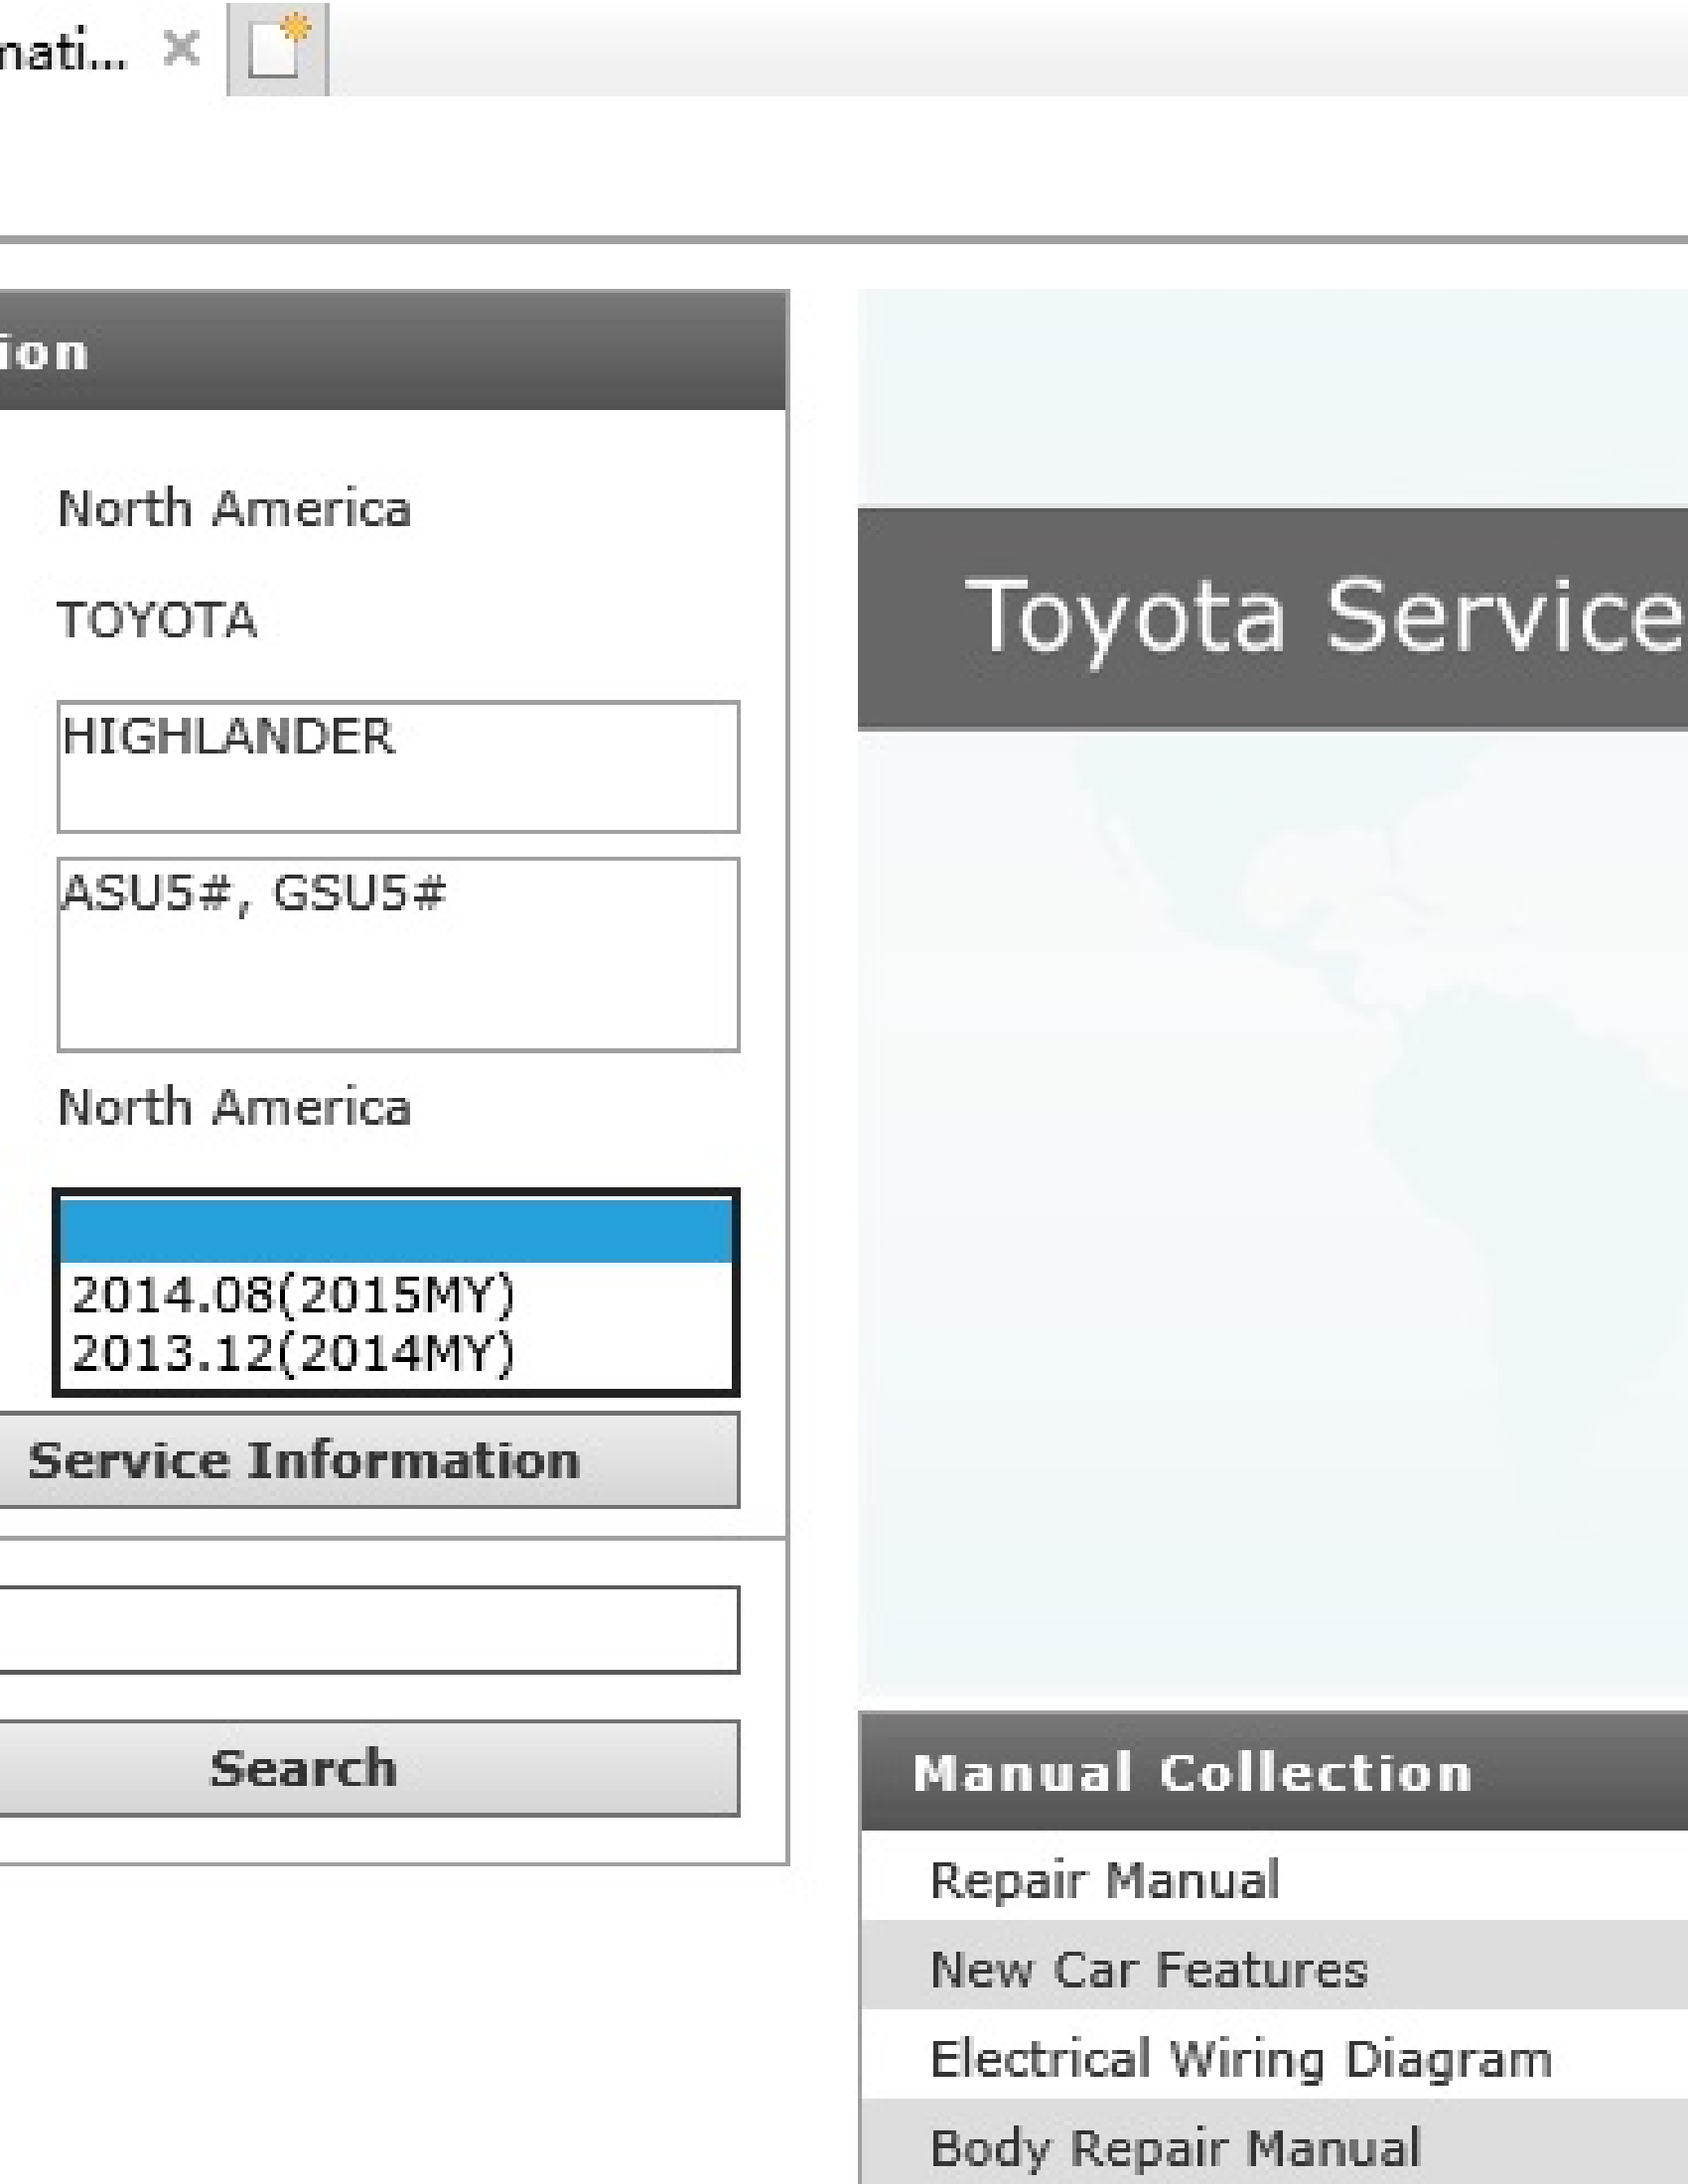 Toyota (ASU5# HIGHLANDER manual